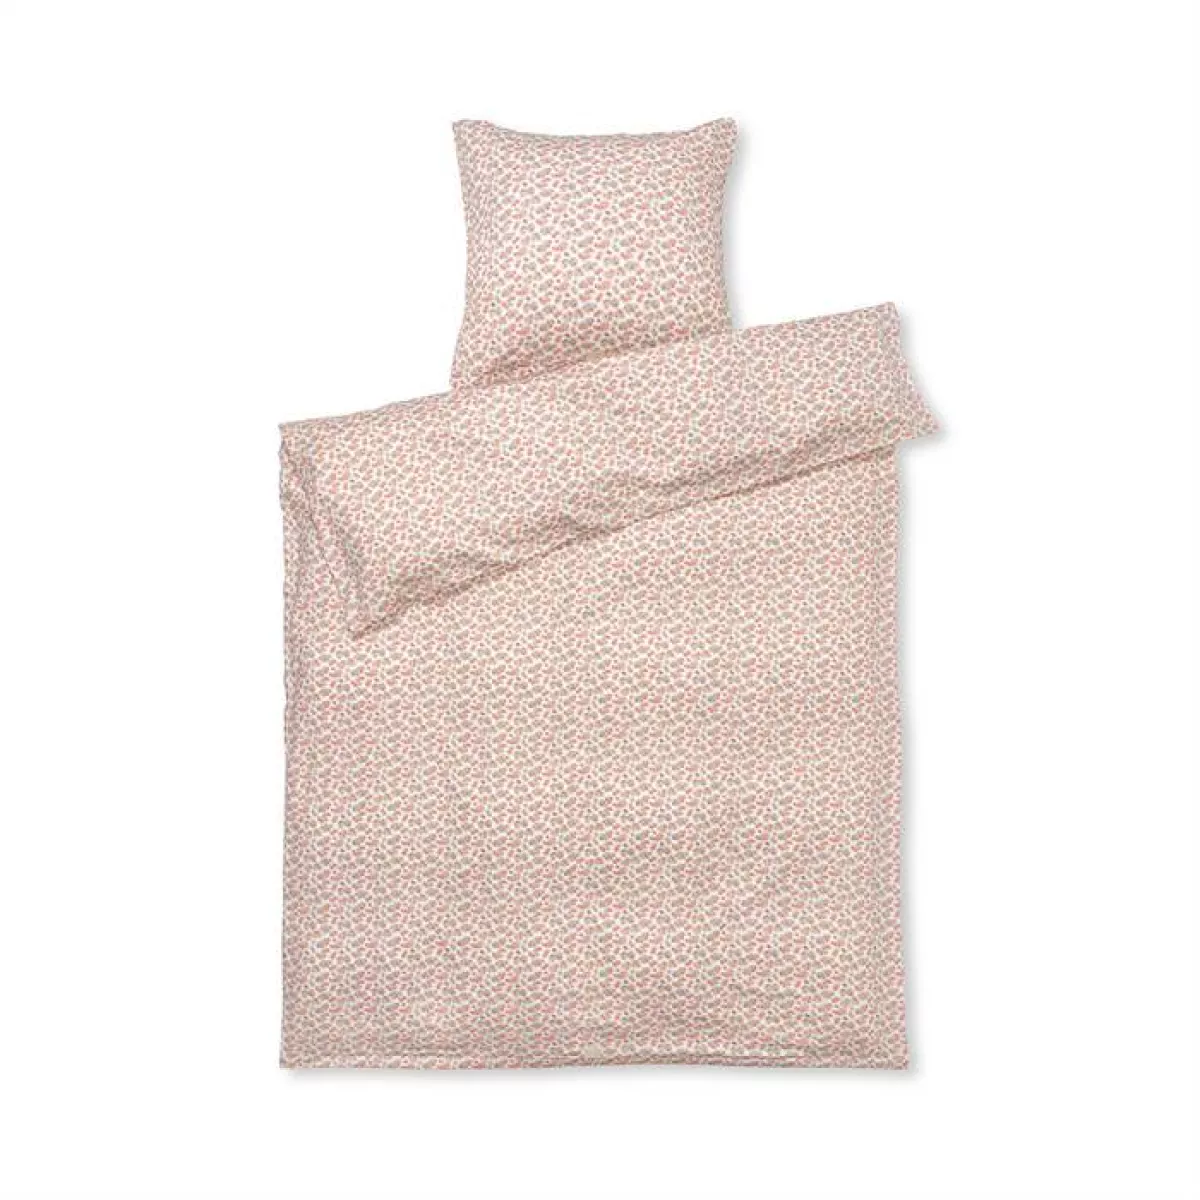 #1 - Juna Pleasantly sengetøj - Rosa / Hvid